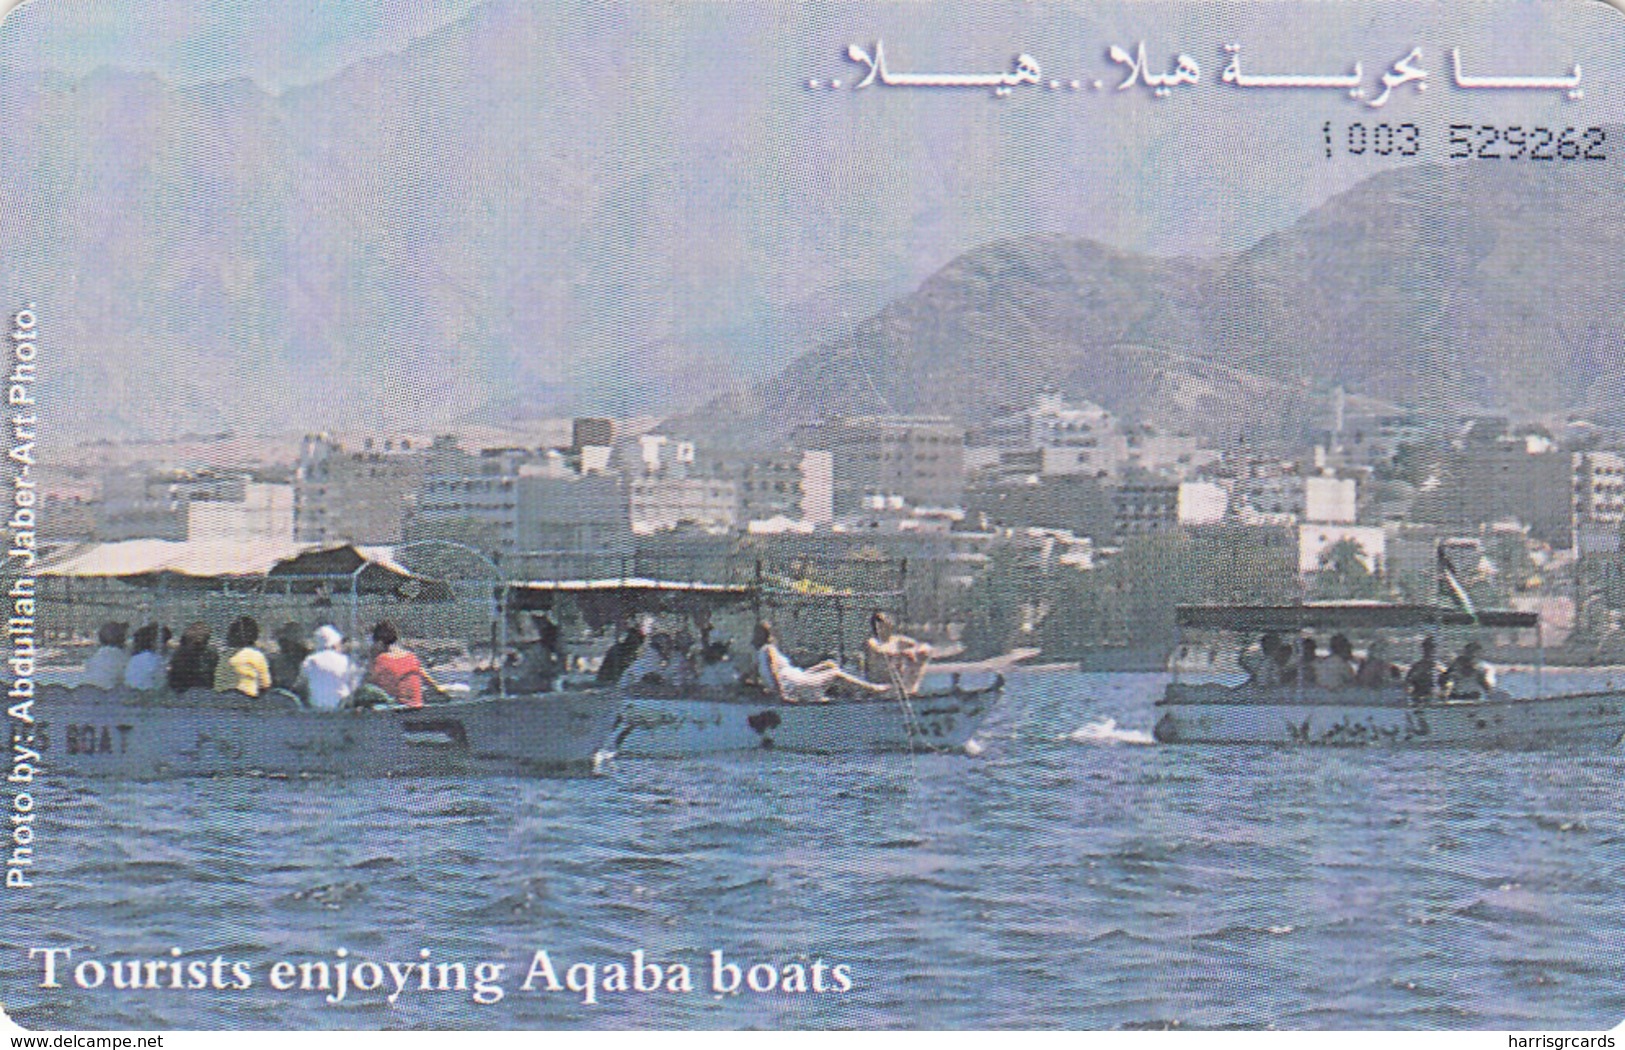 JORDAN - Aqaba Boats, Tirage 200.000, 02/00, Used - Jordanien